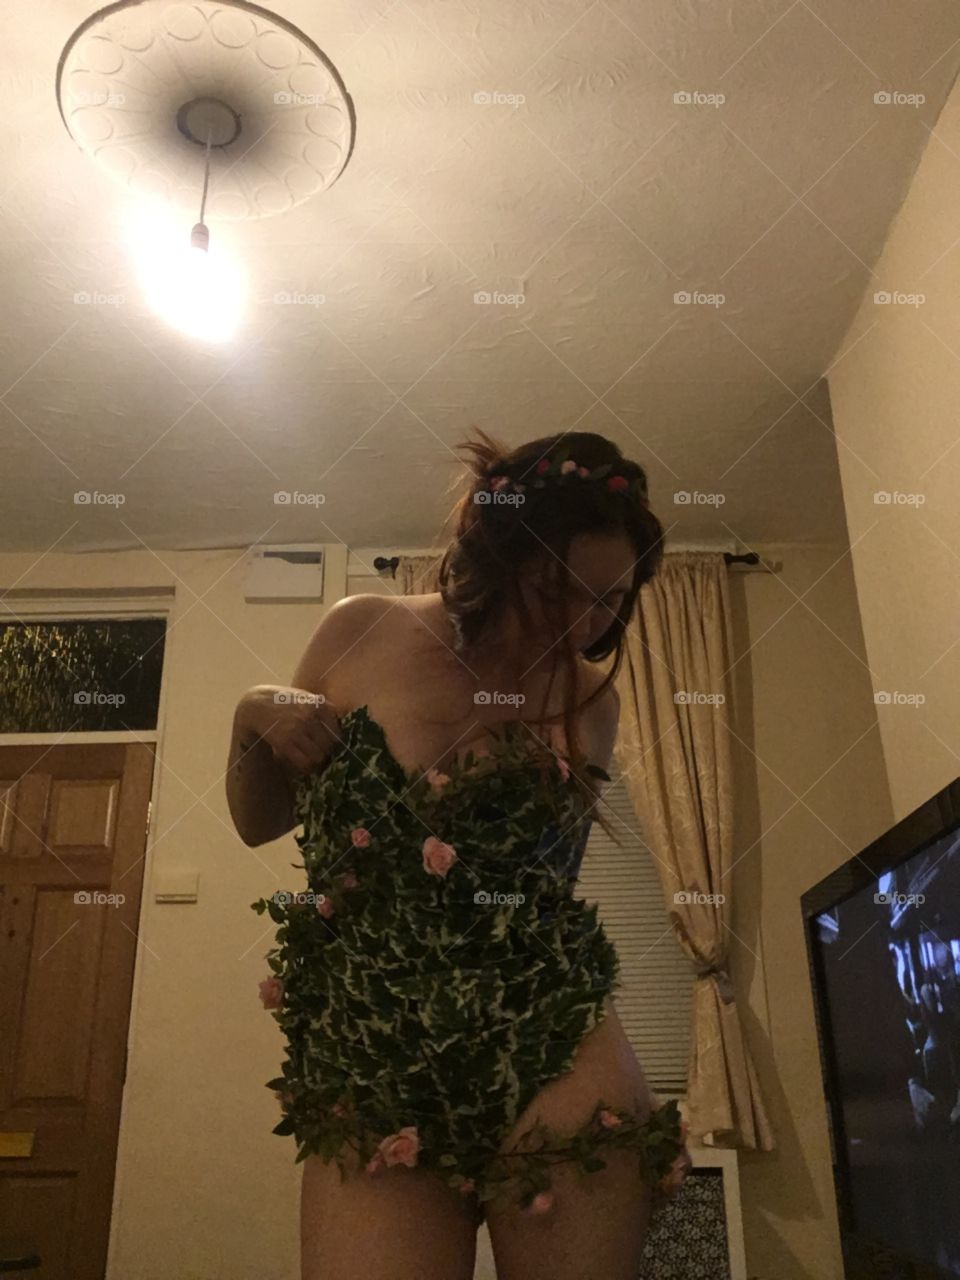 Edited 
Ivy 
Batman 
Poison ivy 